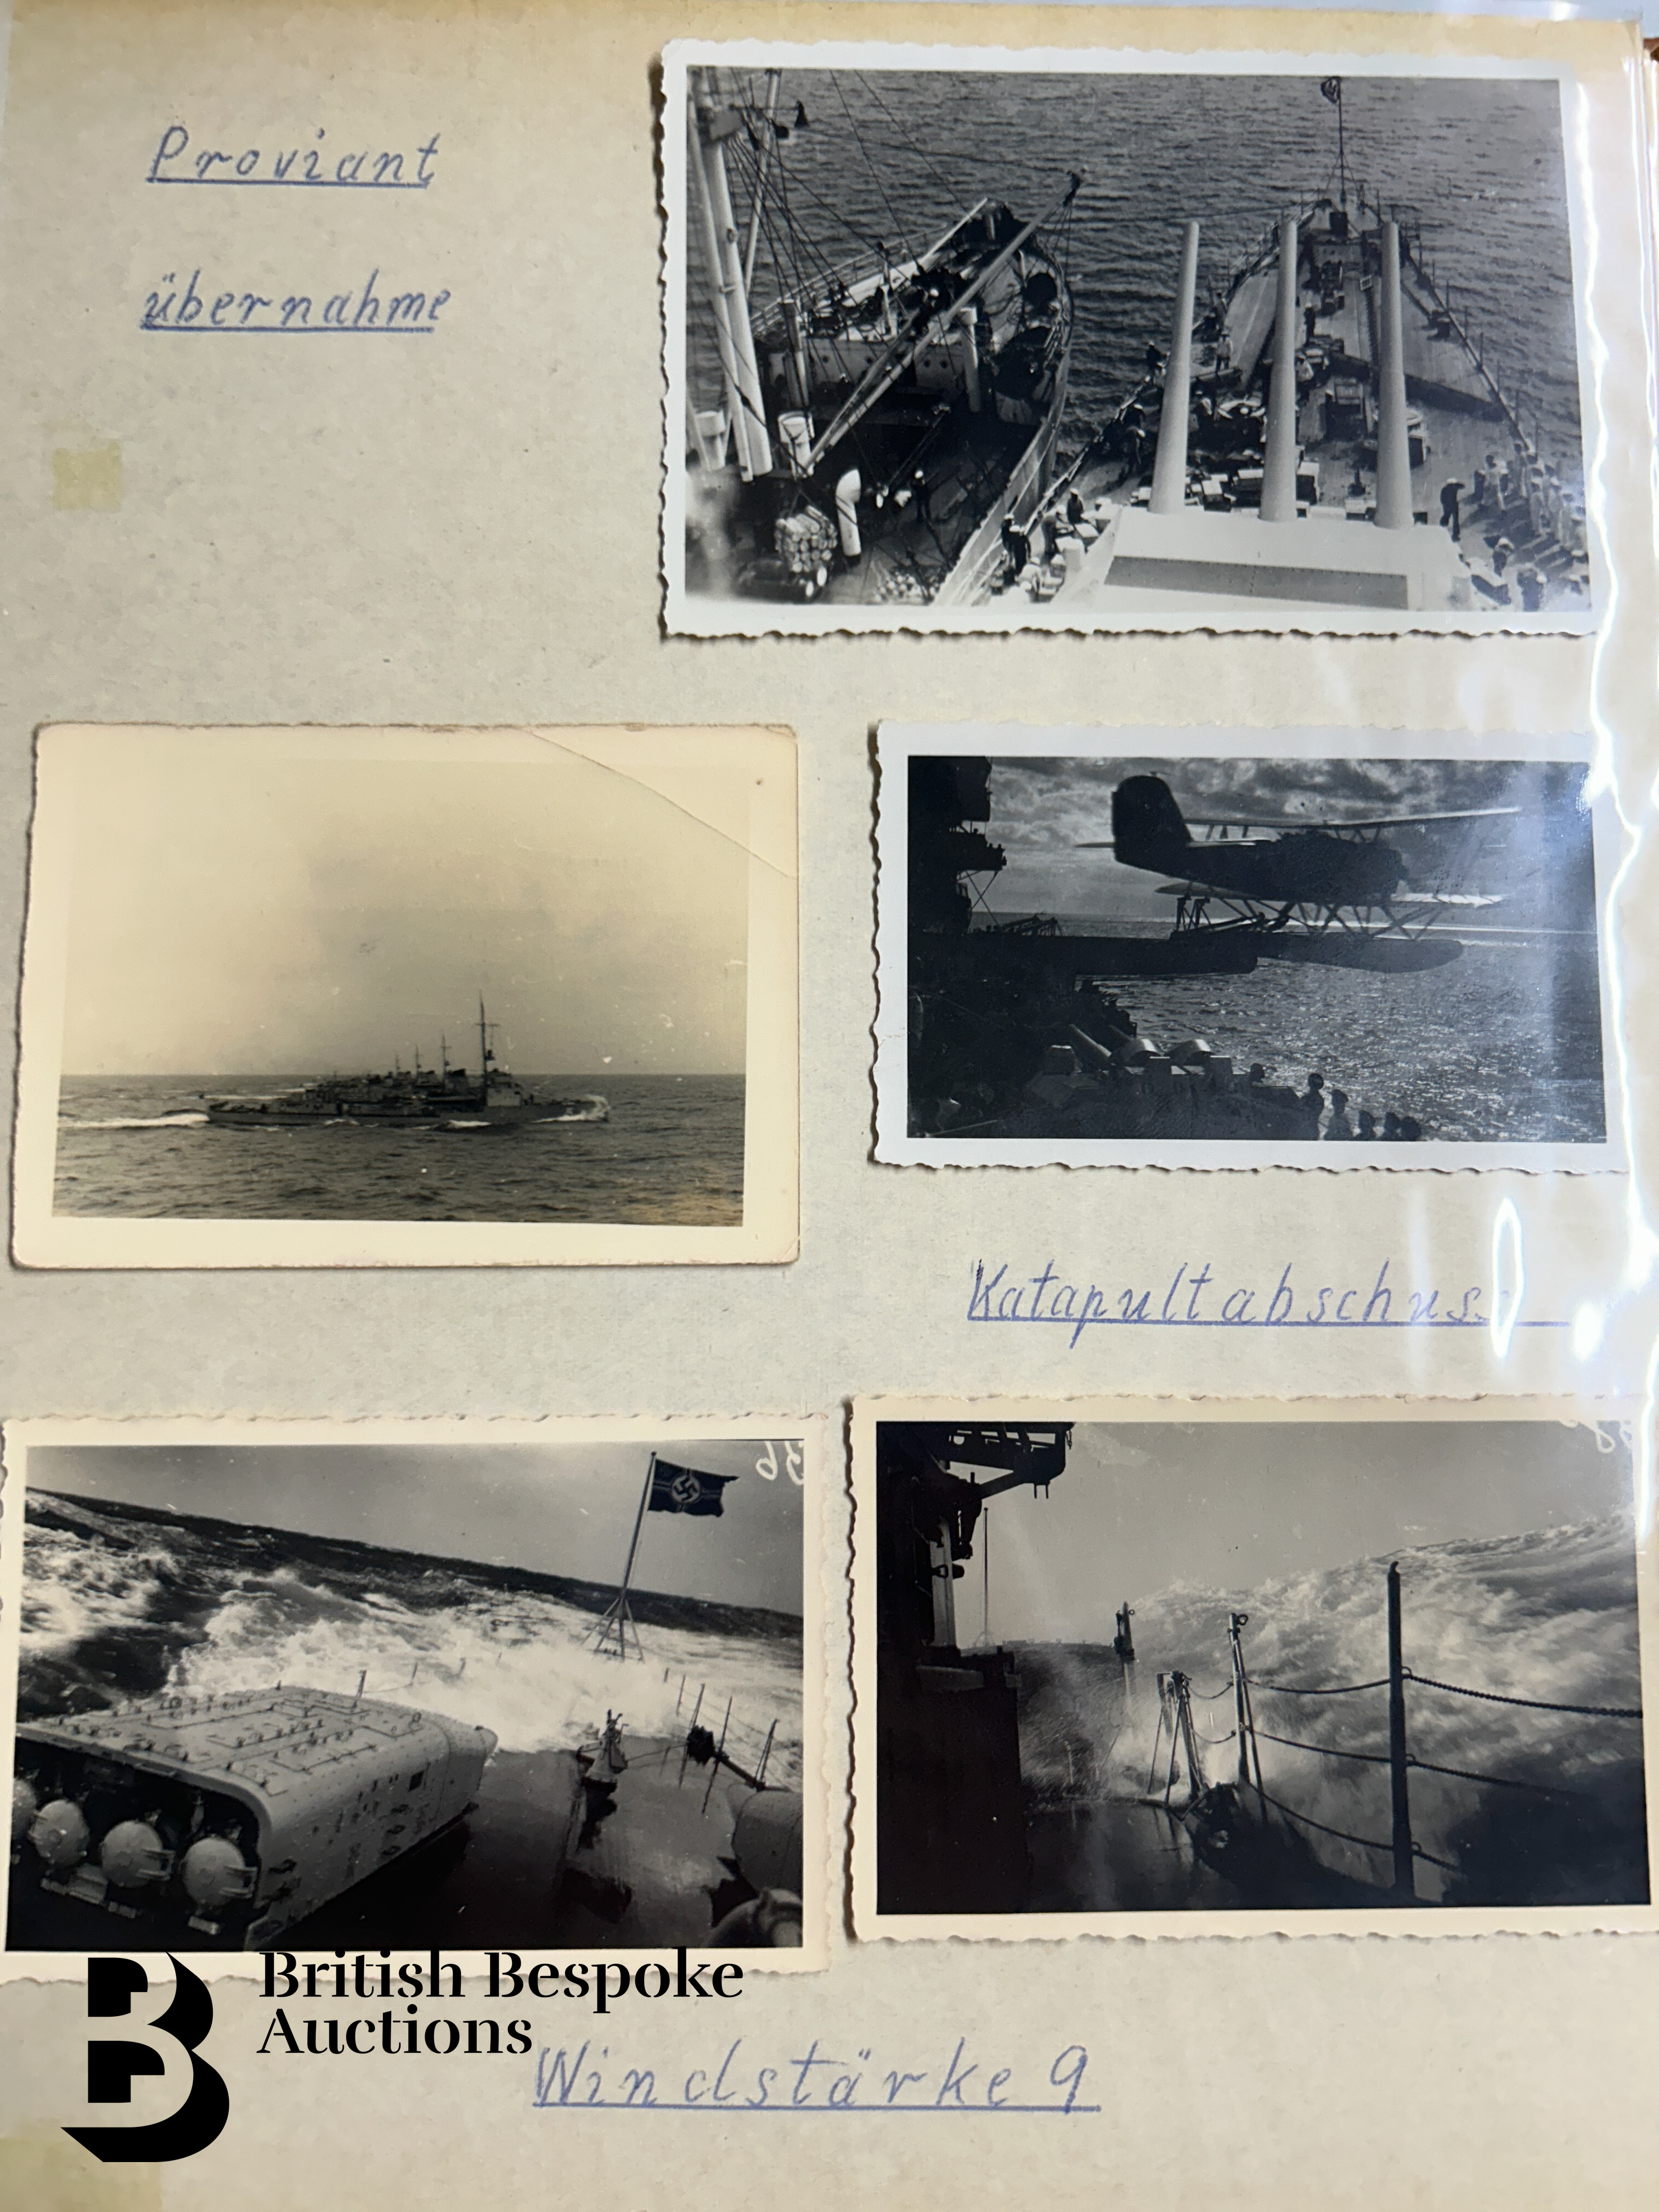 Graf Spee (Pocket Battleship) Interest, incl. Photographs, Documents, Miscellanea - Image 78 of 126